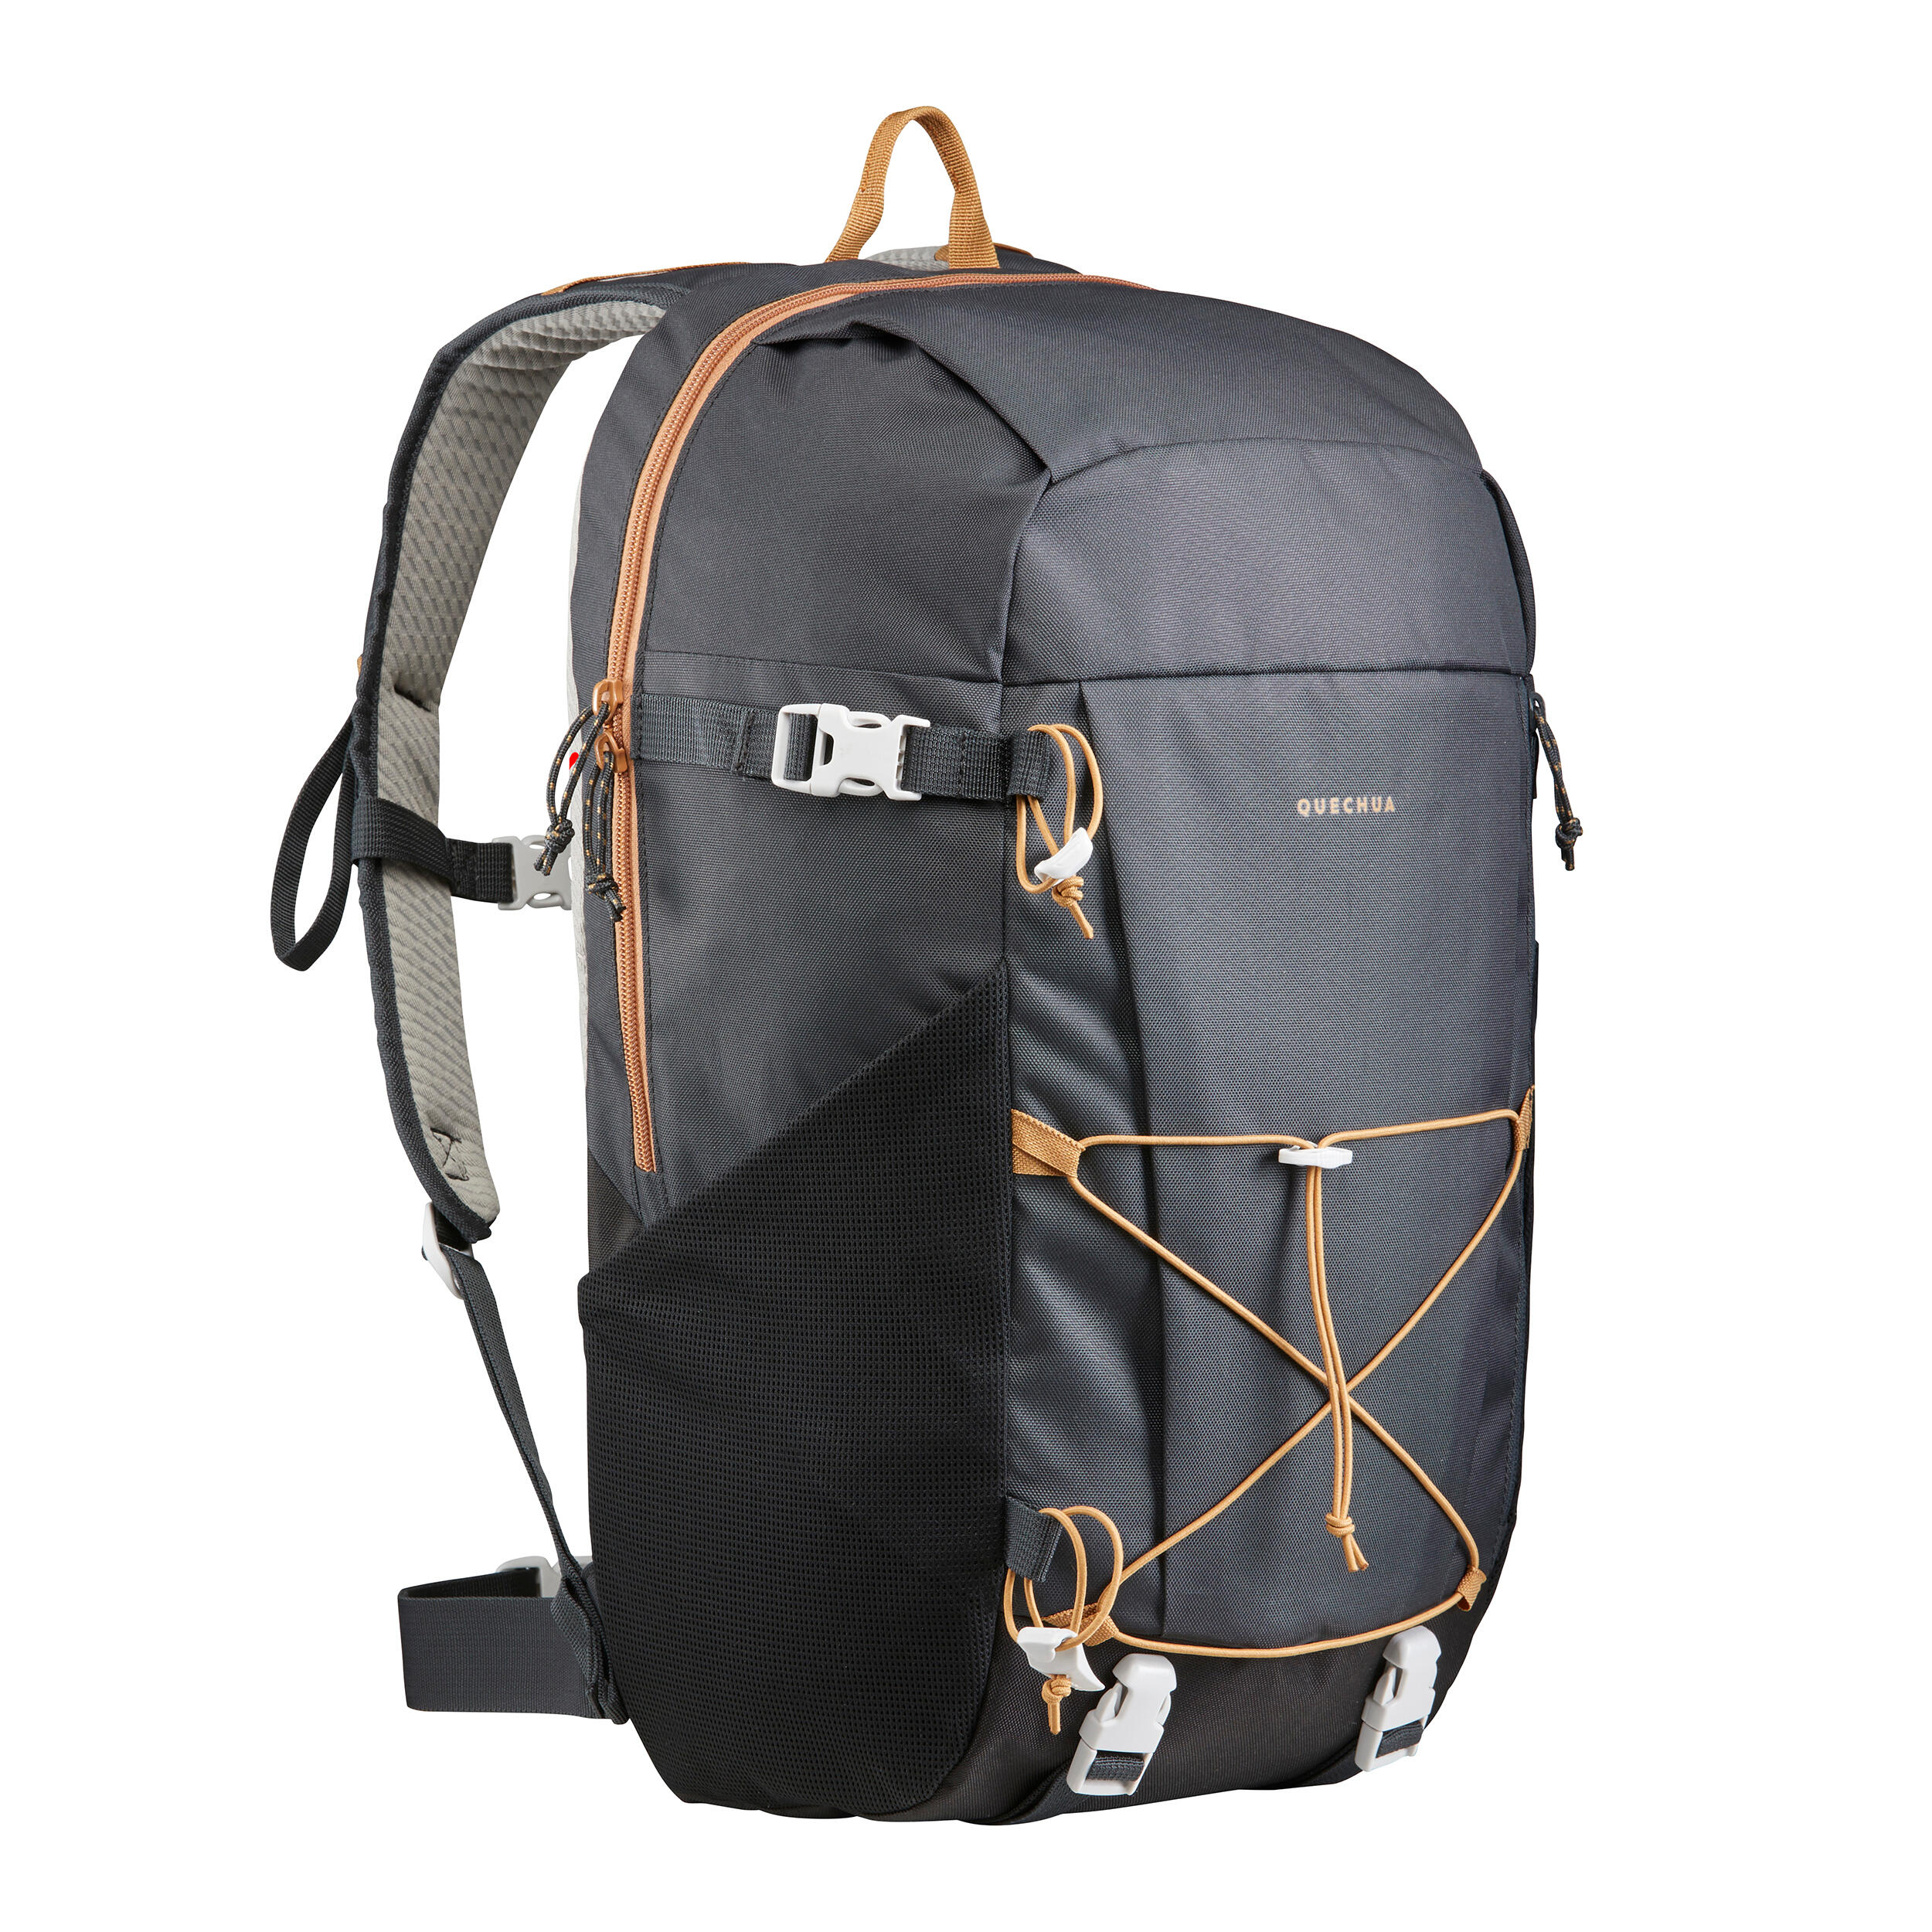 Buy Hiking Bag 30 Litre Nh100 Black Online | Decathlon